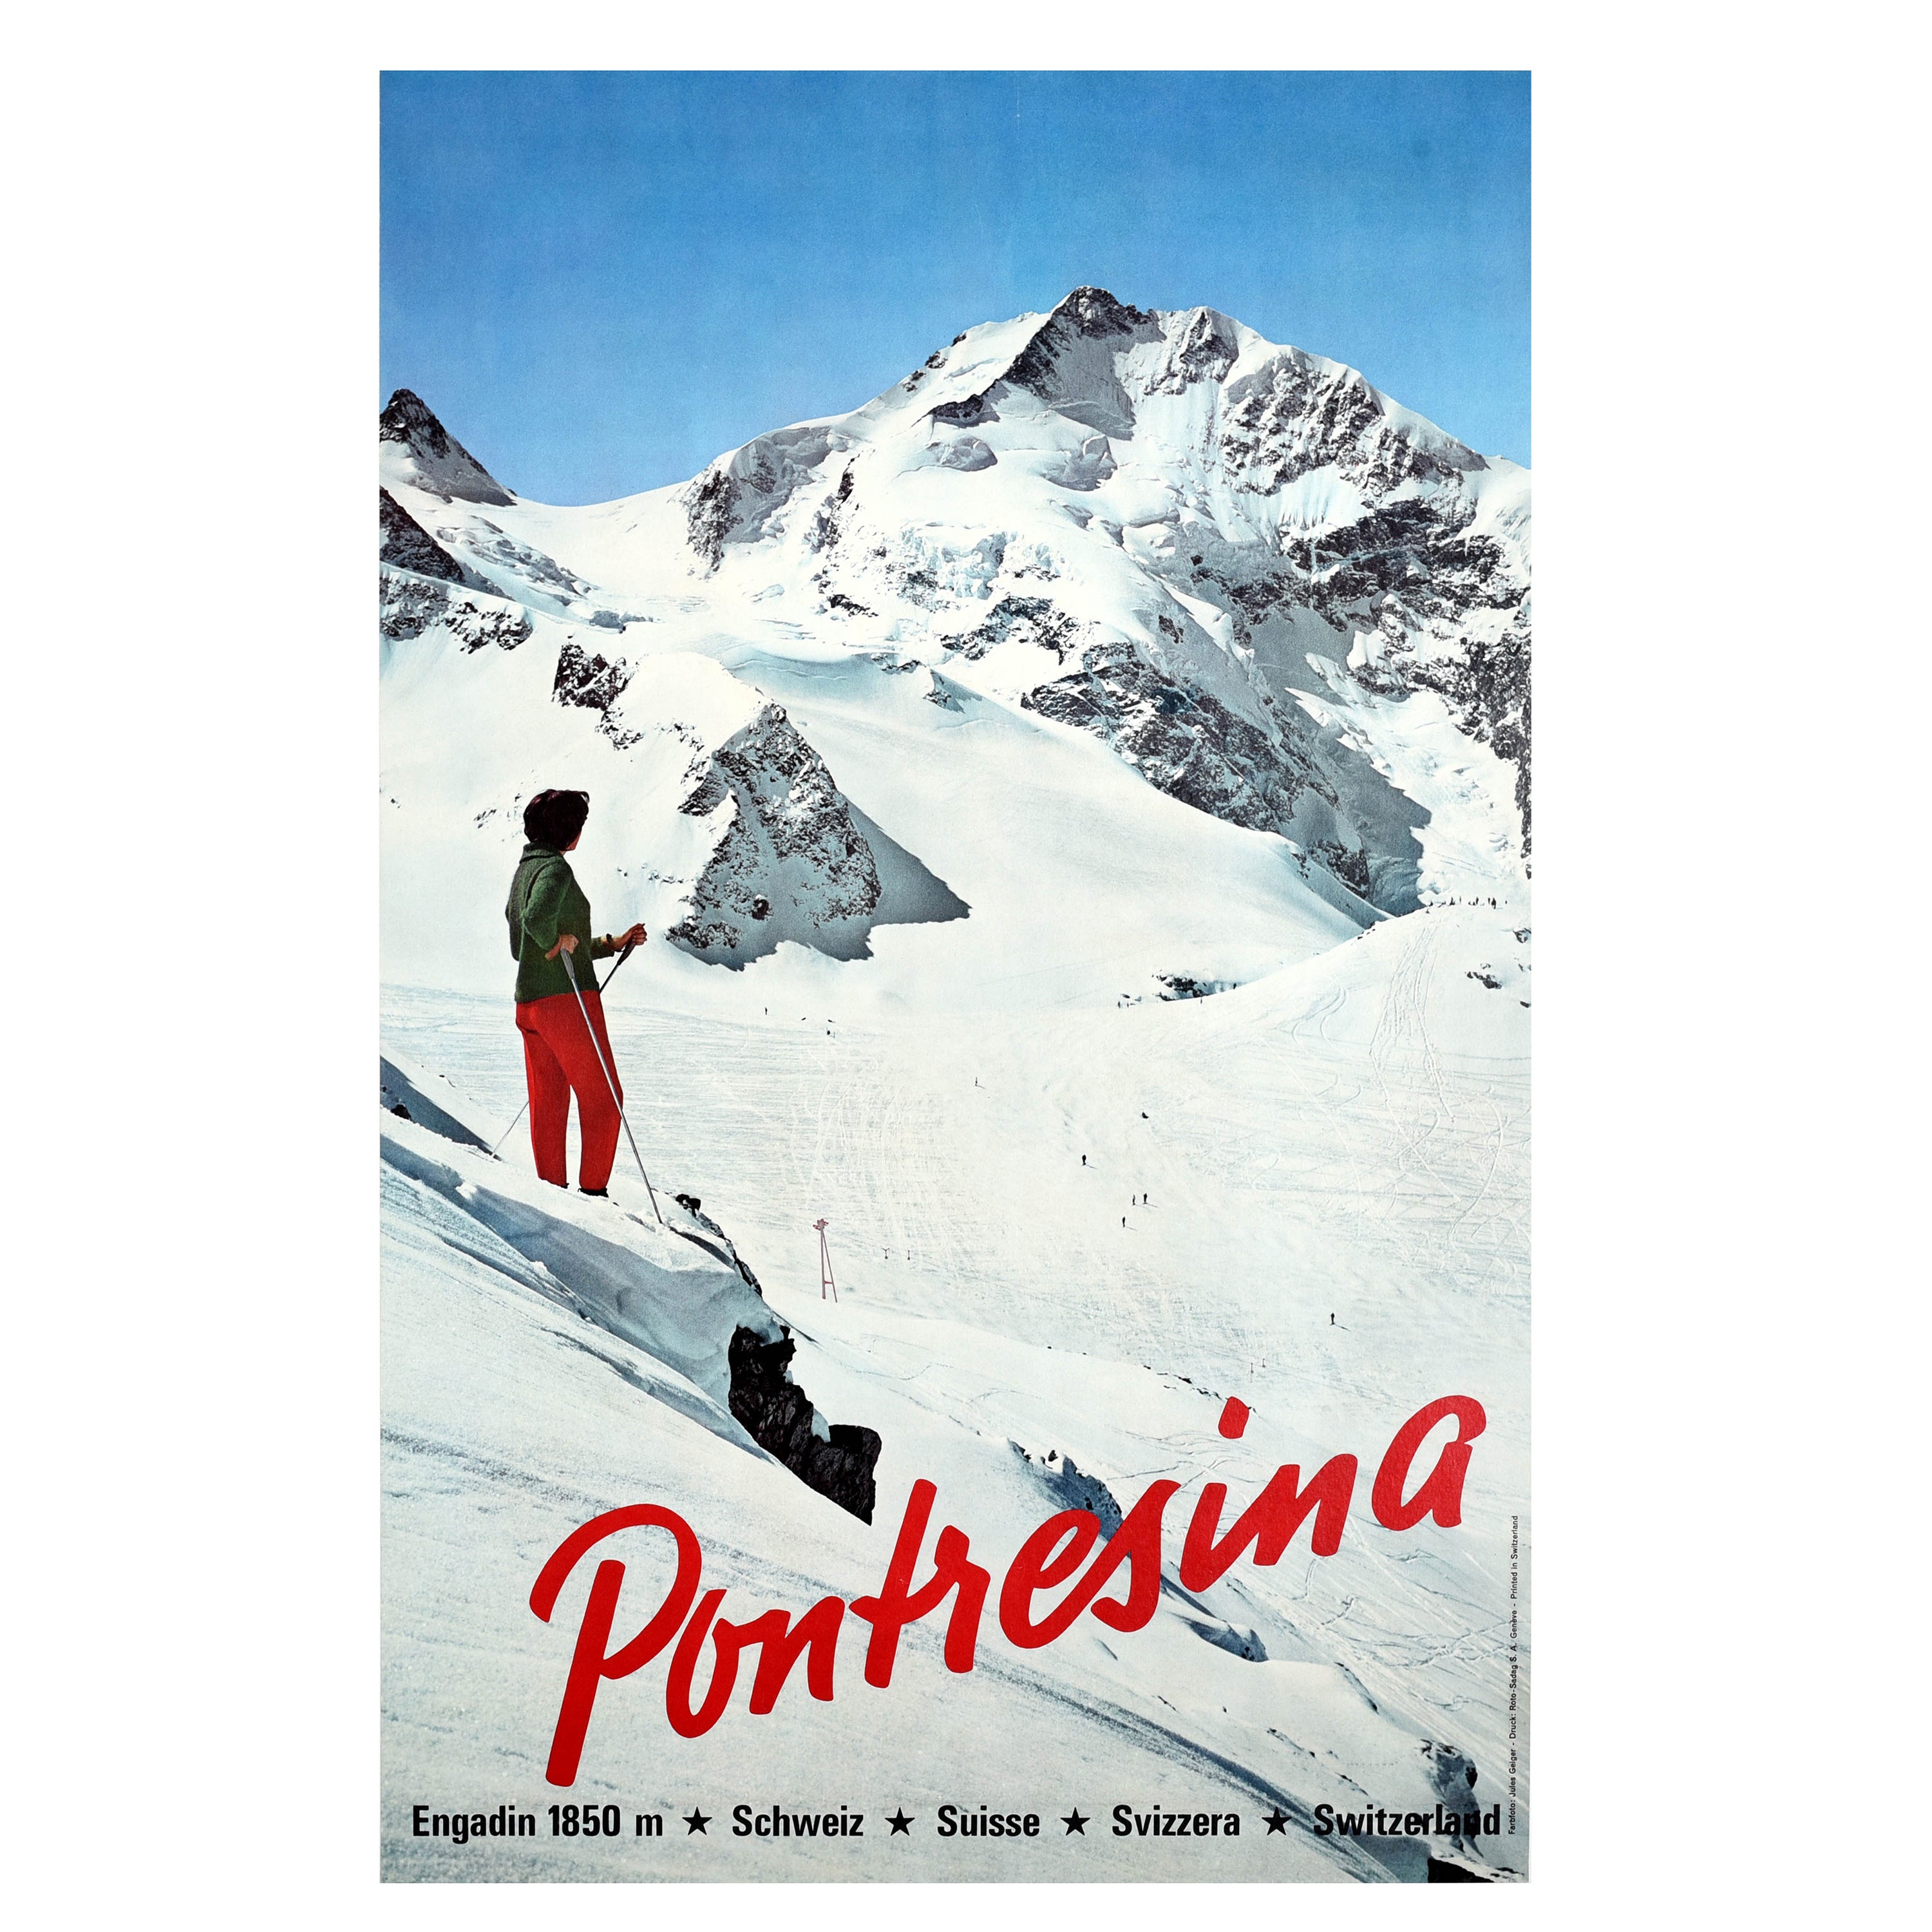 Vintage Ski World Matterhorn Skier Gets Some Air Ski Photo Lodge Decor Wall Art 1940s Zermatt Available in 2 Sizes and Sepia Black & White 8 x 10 in Switzerland 